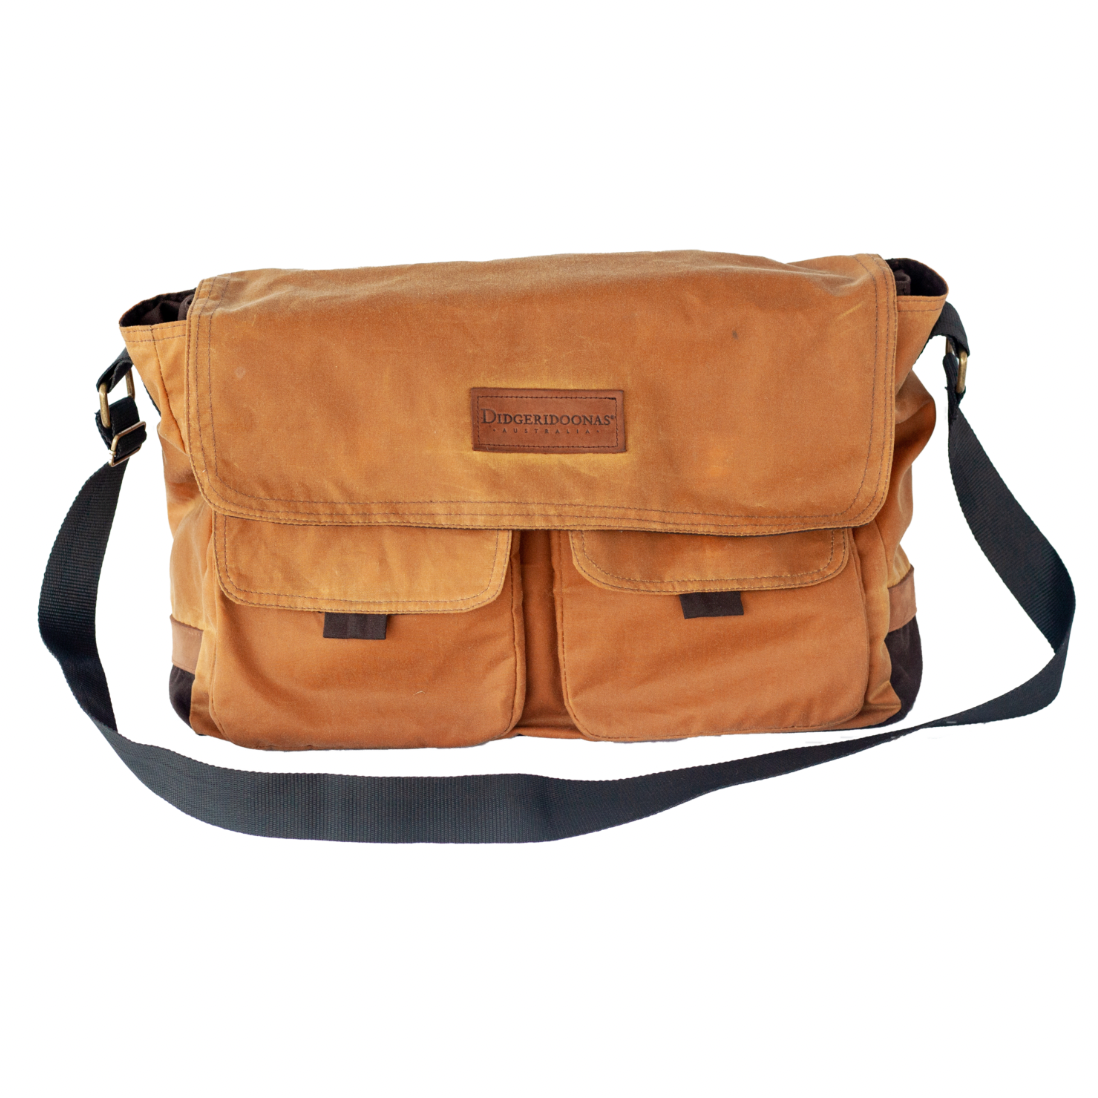 Ryebuck Australian Oilskin Laptop Bag for Everyday Adventures - Countryside Gear at The Golden Apple